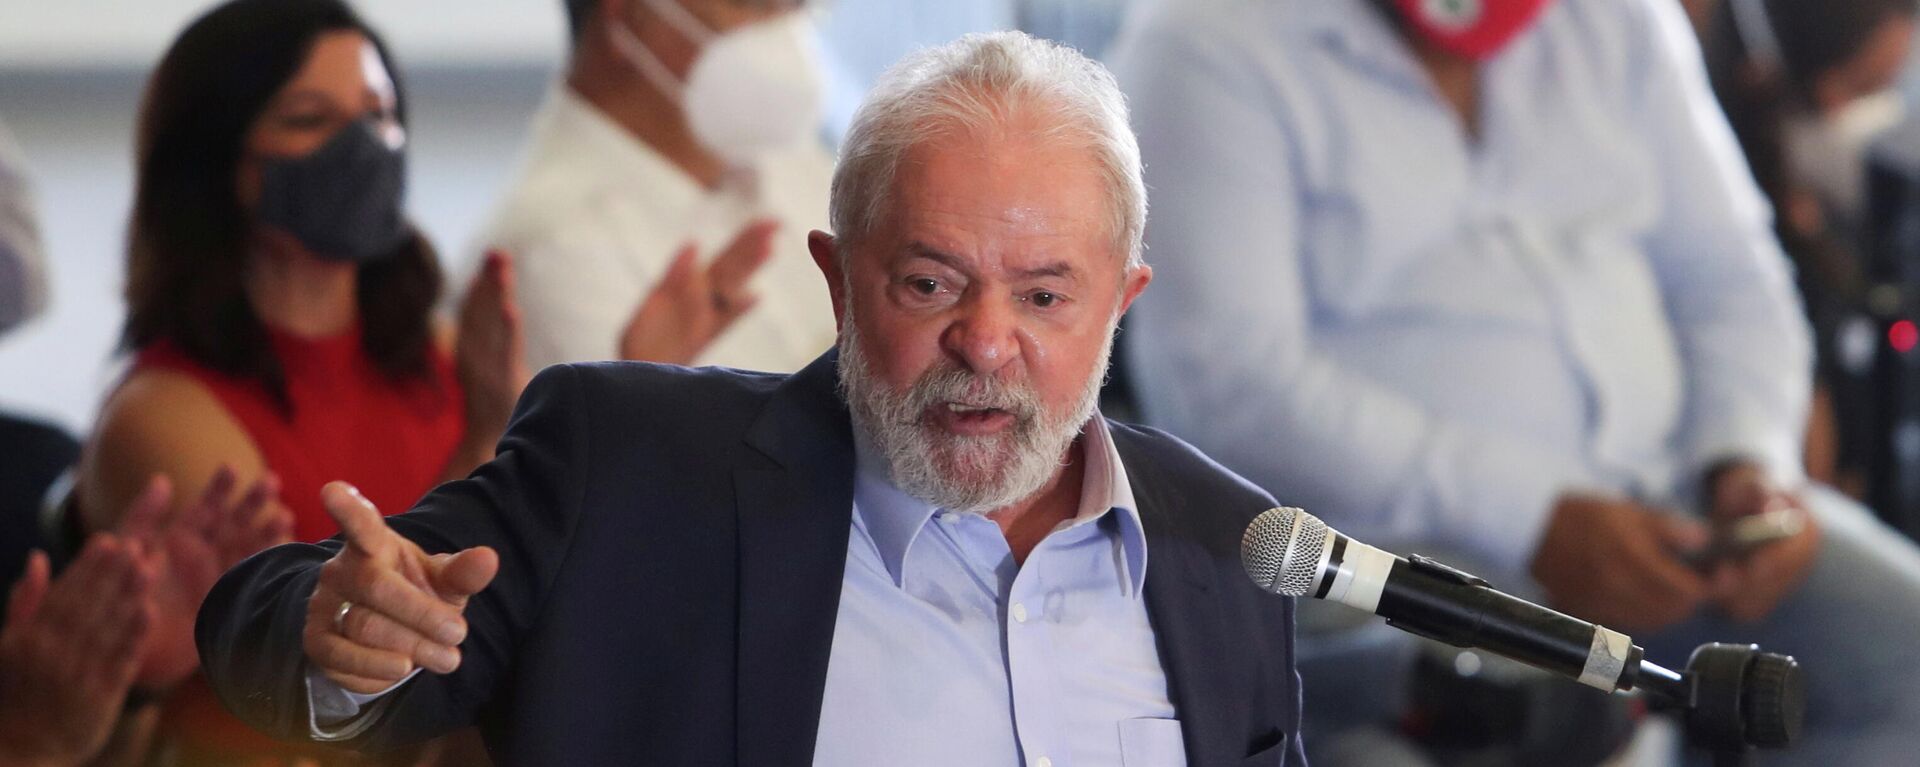 Luiz Inácio Lula da Silva, expresidente de Brasil - Sputnik Mundo, 1920, 18.05.2021